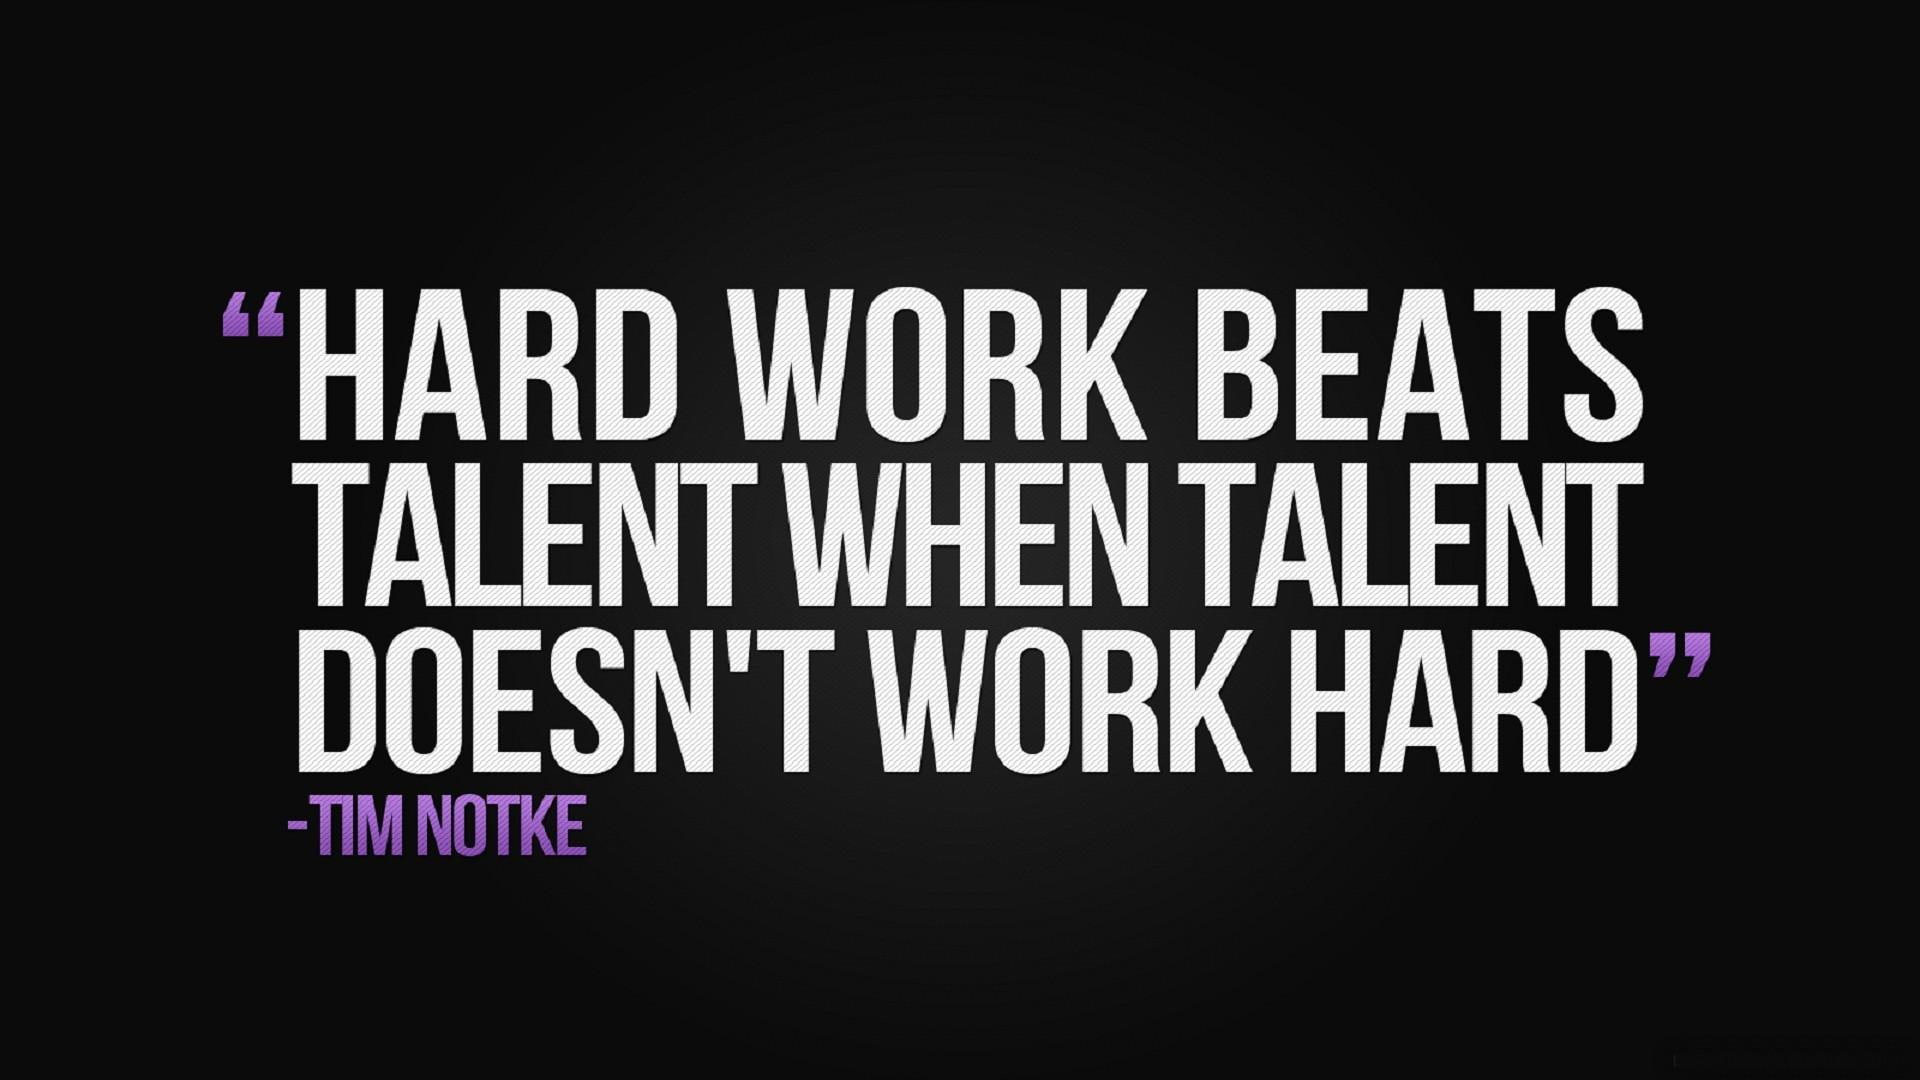 Tim Notke quote wallpaper, hard work beats talent when talent doens't work hard